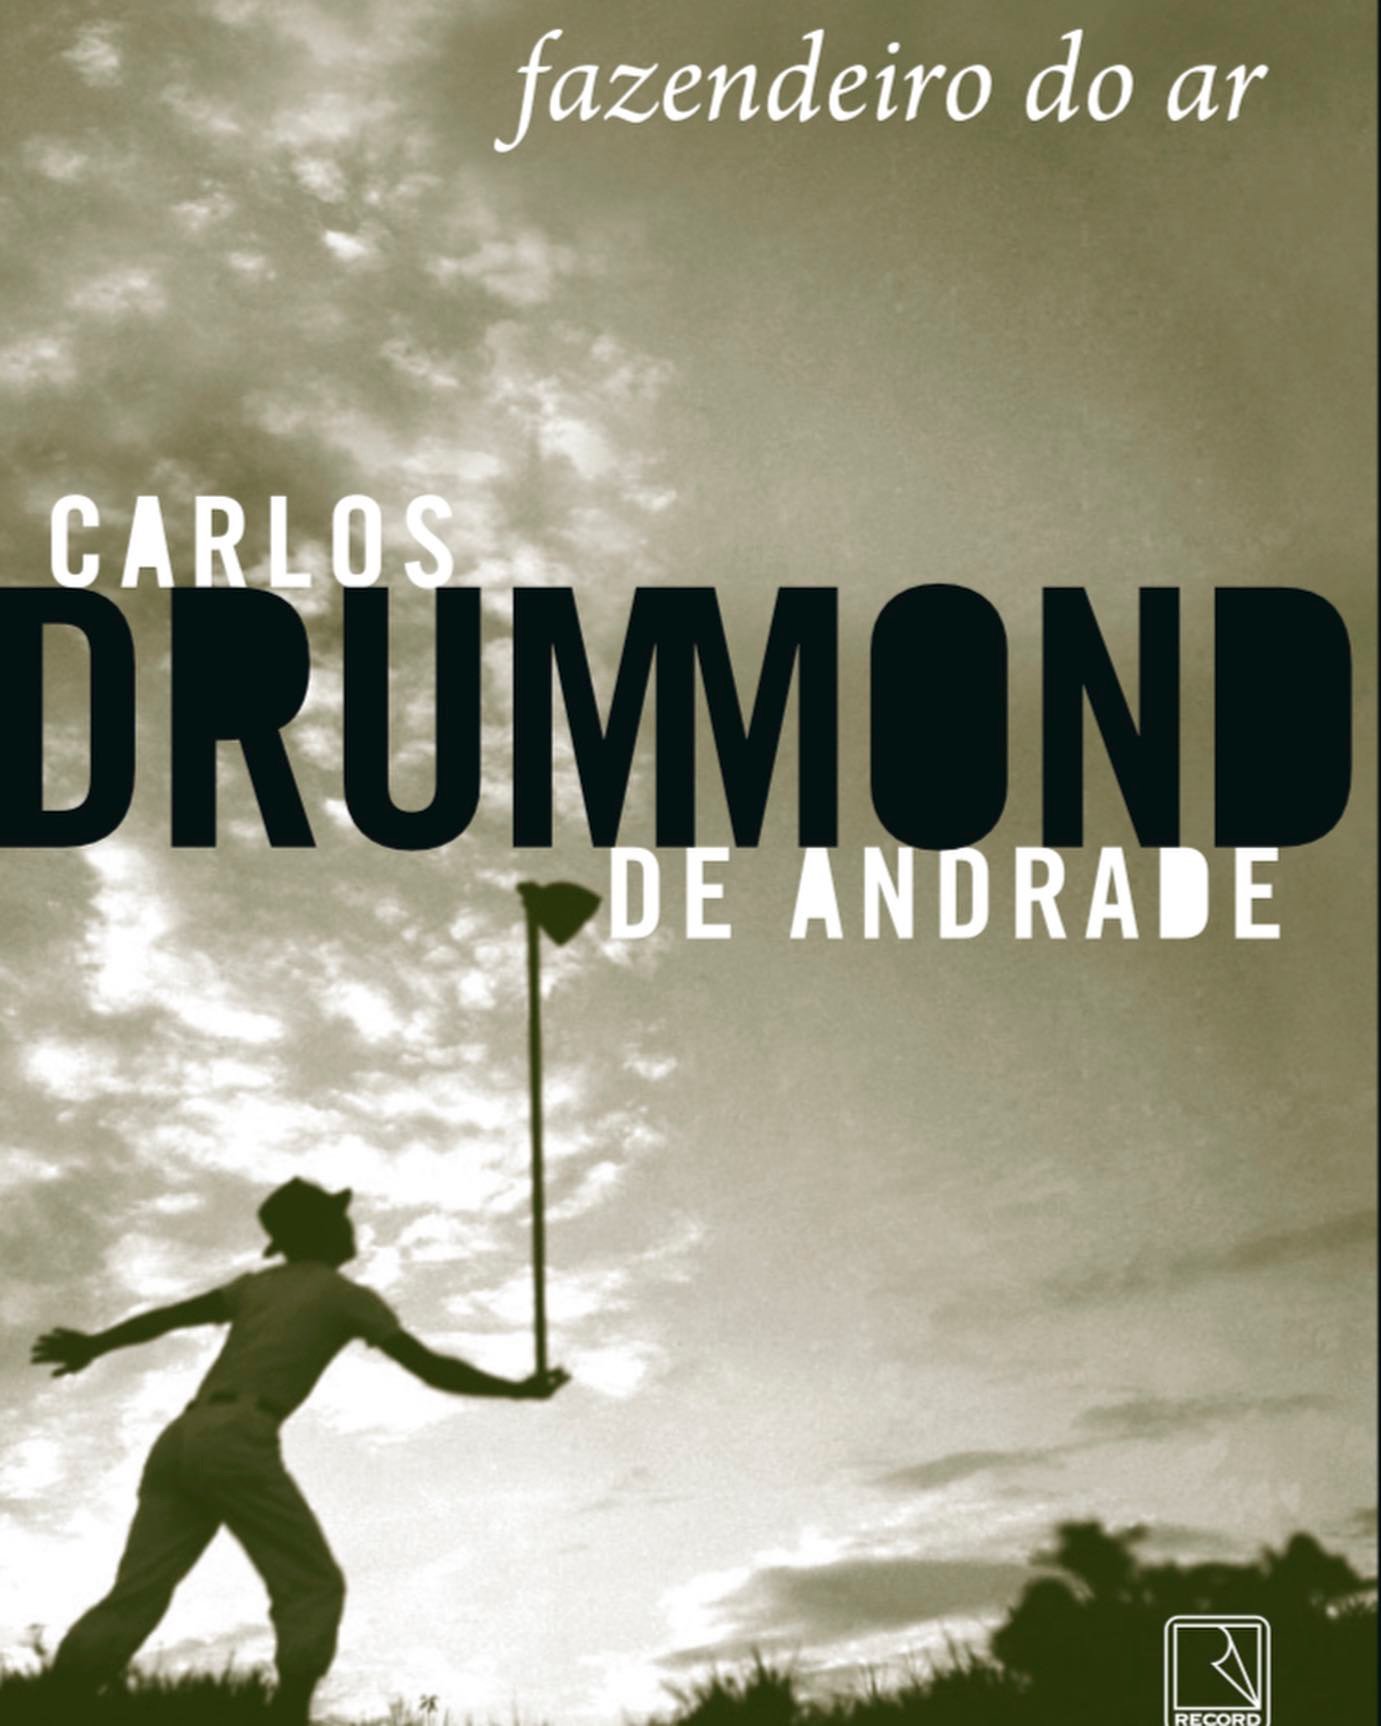 fazendeiro do ar Carlos Drummond de Andrade editora Record_posfácio título As noites de Drummond e seus clarões